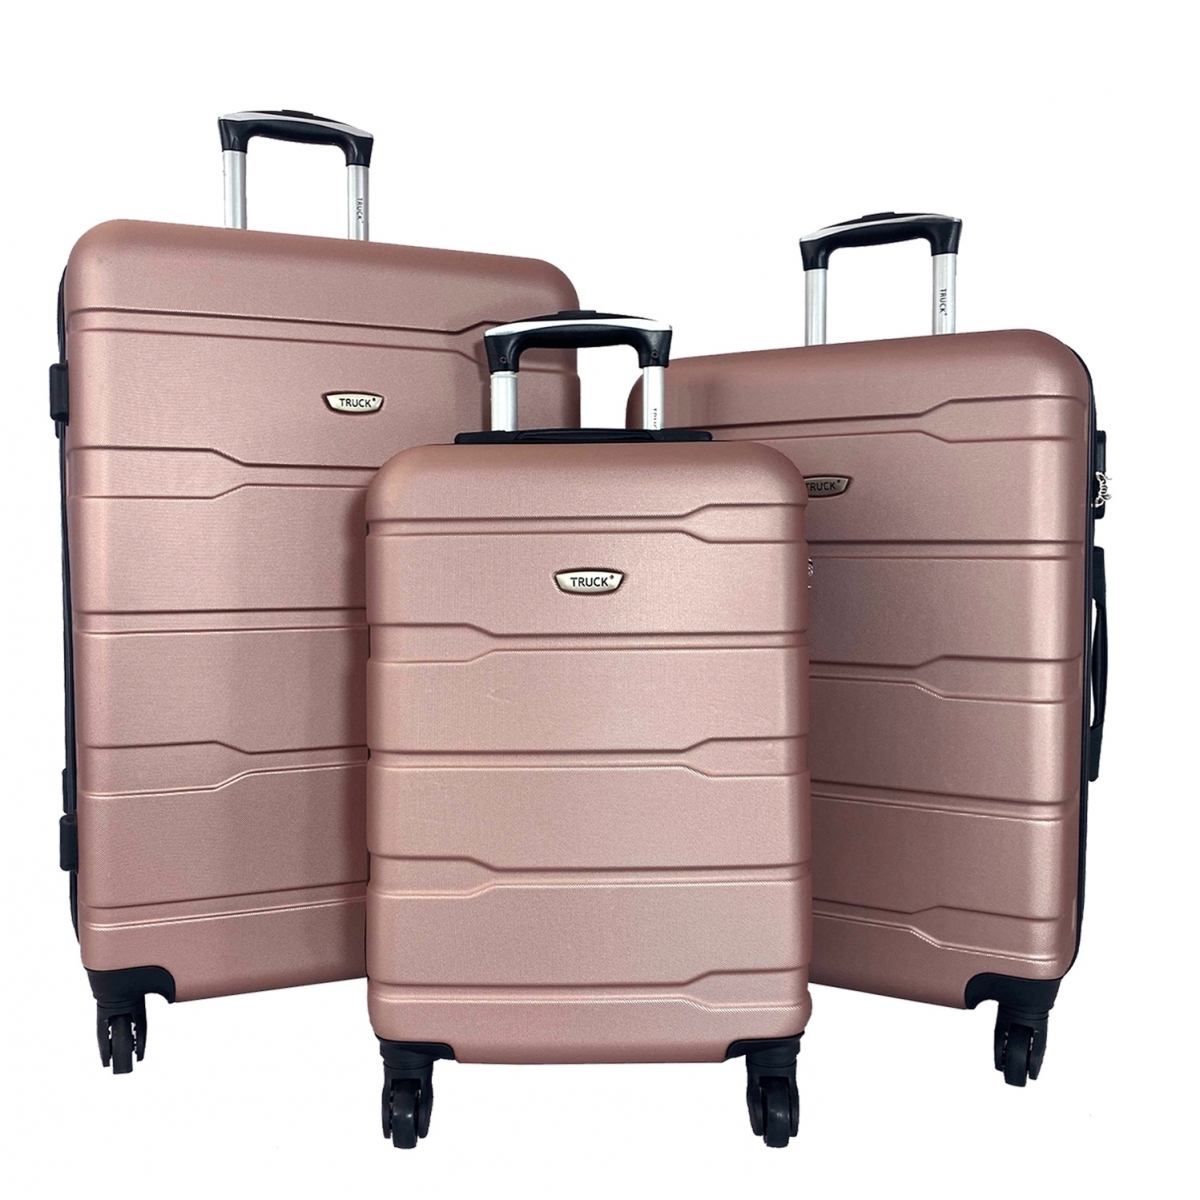 Lot 3 valises rigides dont 1 valise cabine Truck ABS - TR10413-ROSE -  Couleur principale : ROSE - valise pas cher 